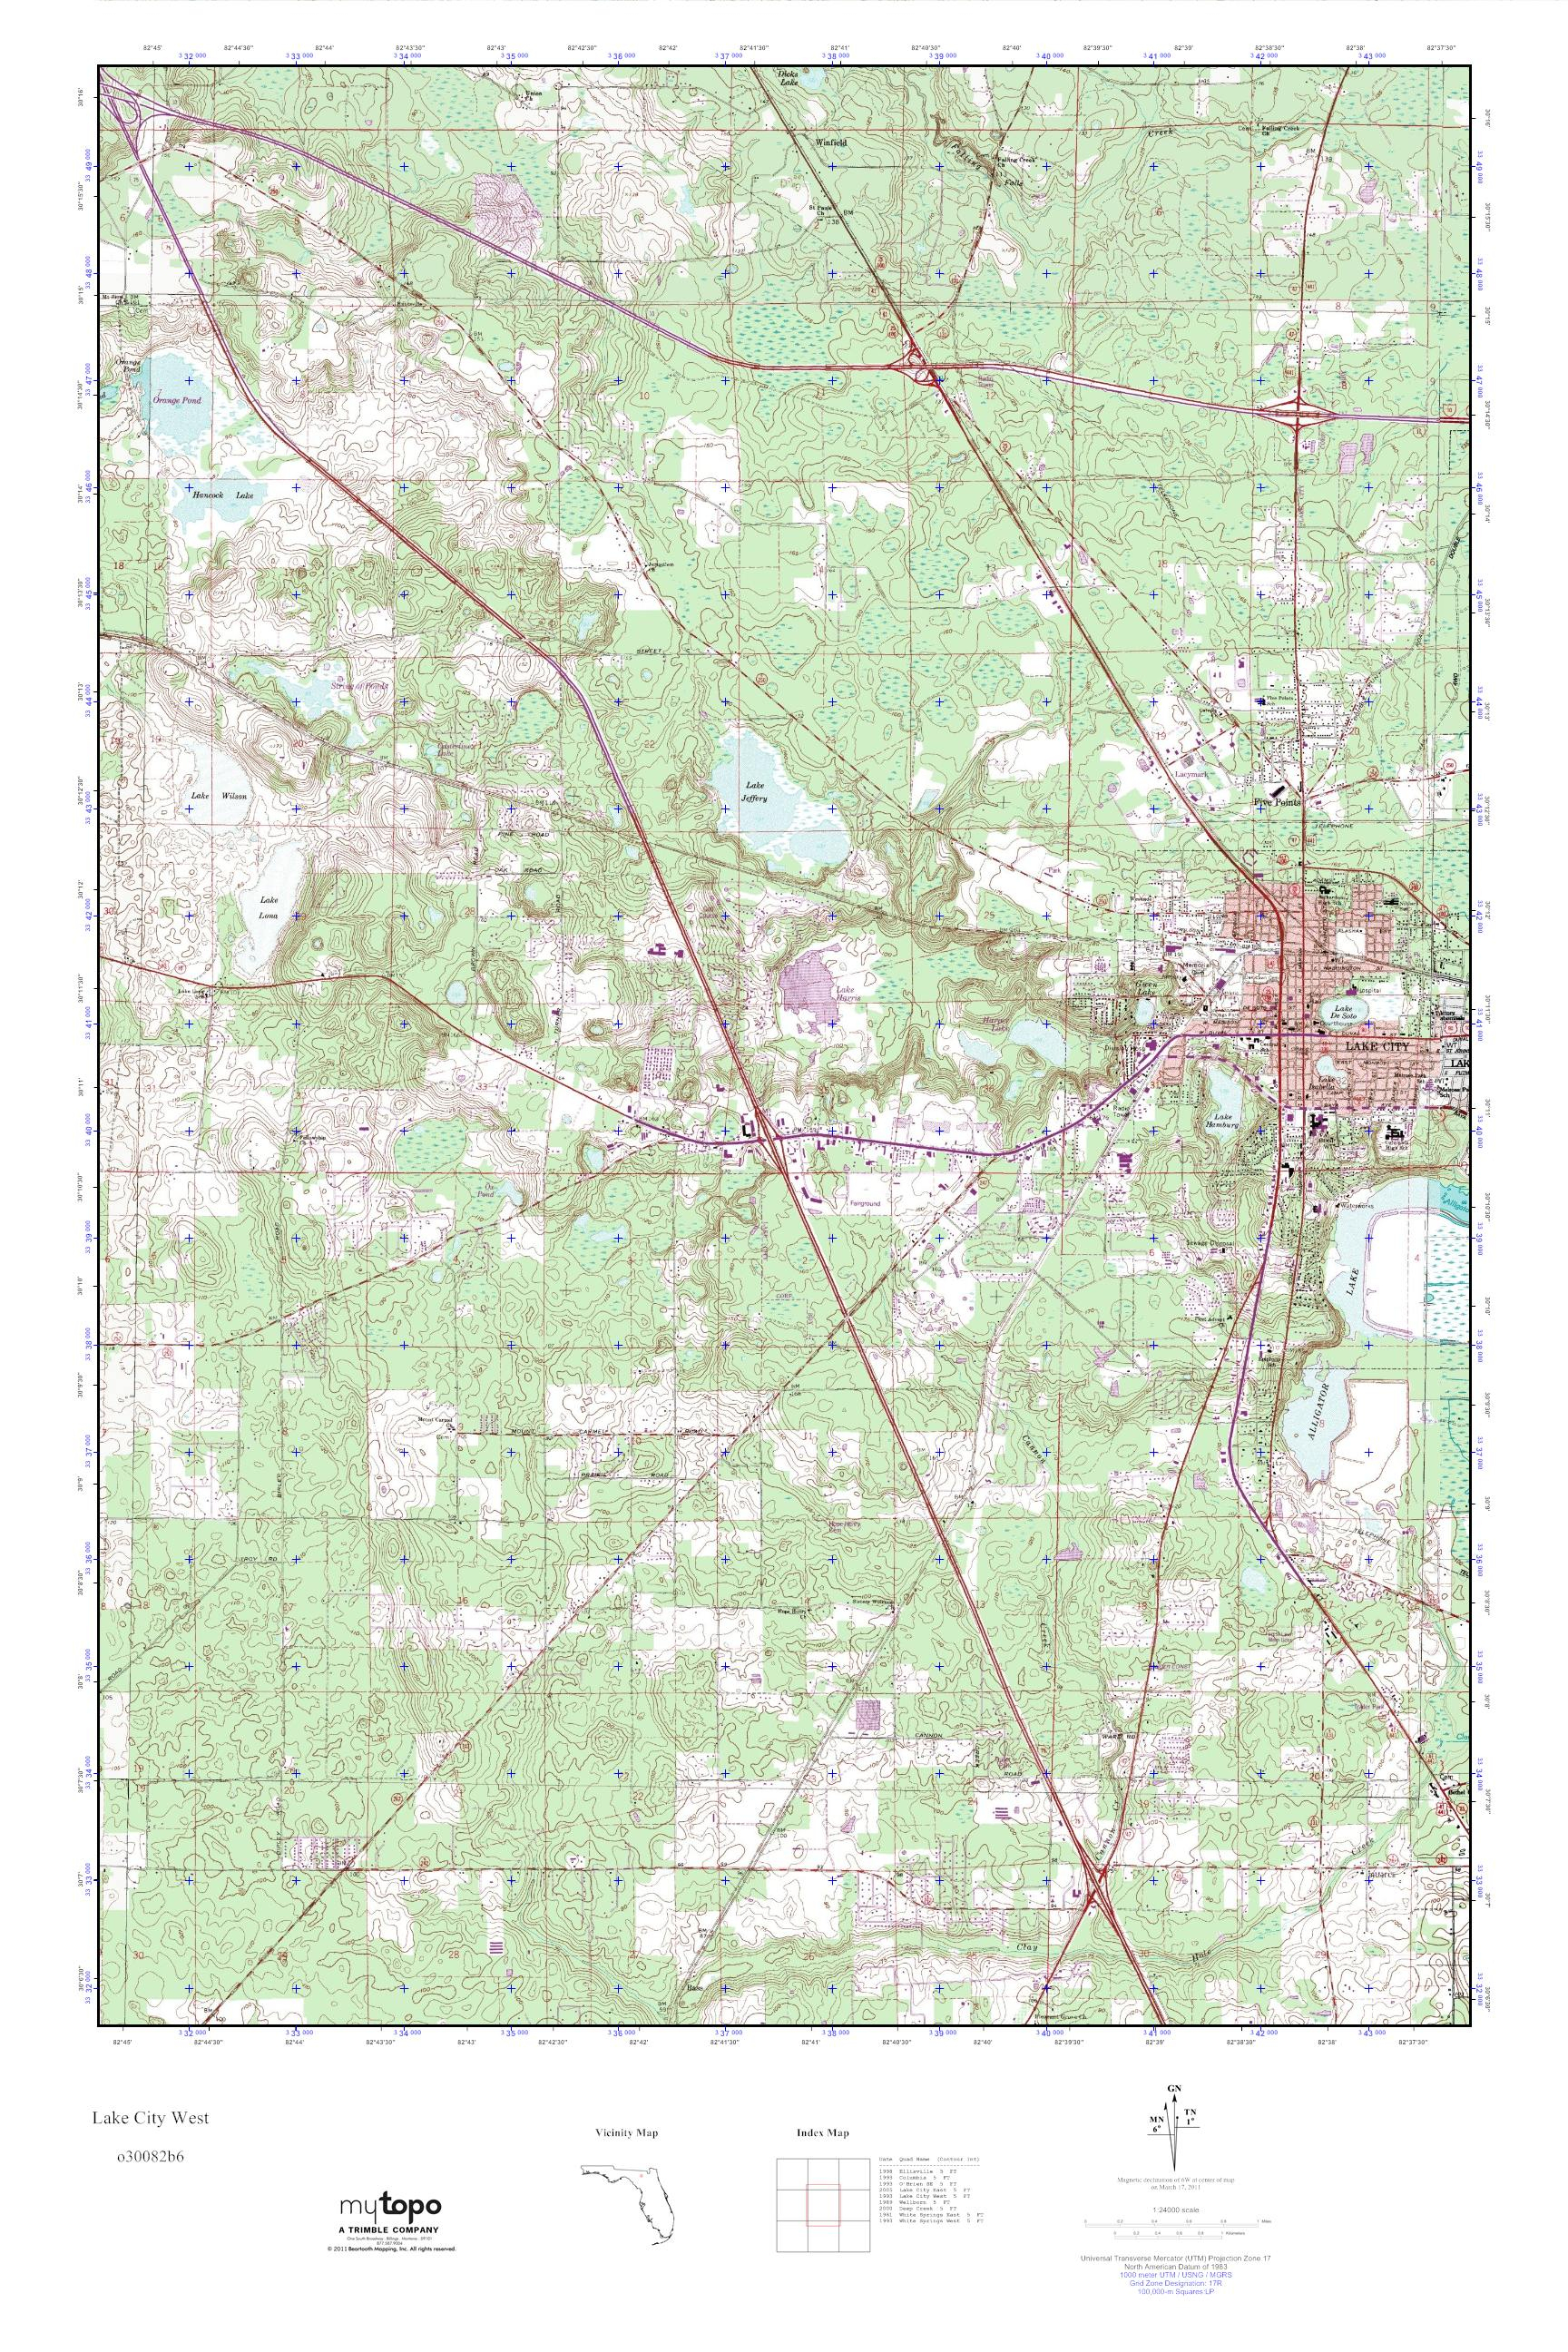 Mytopo Lake City West, Florida Usgs Quad Topo Map - Lake City Florida Map